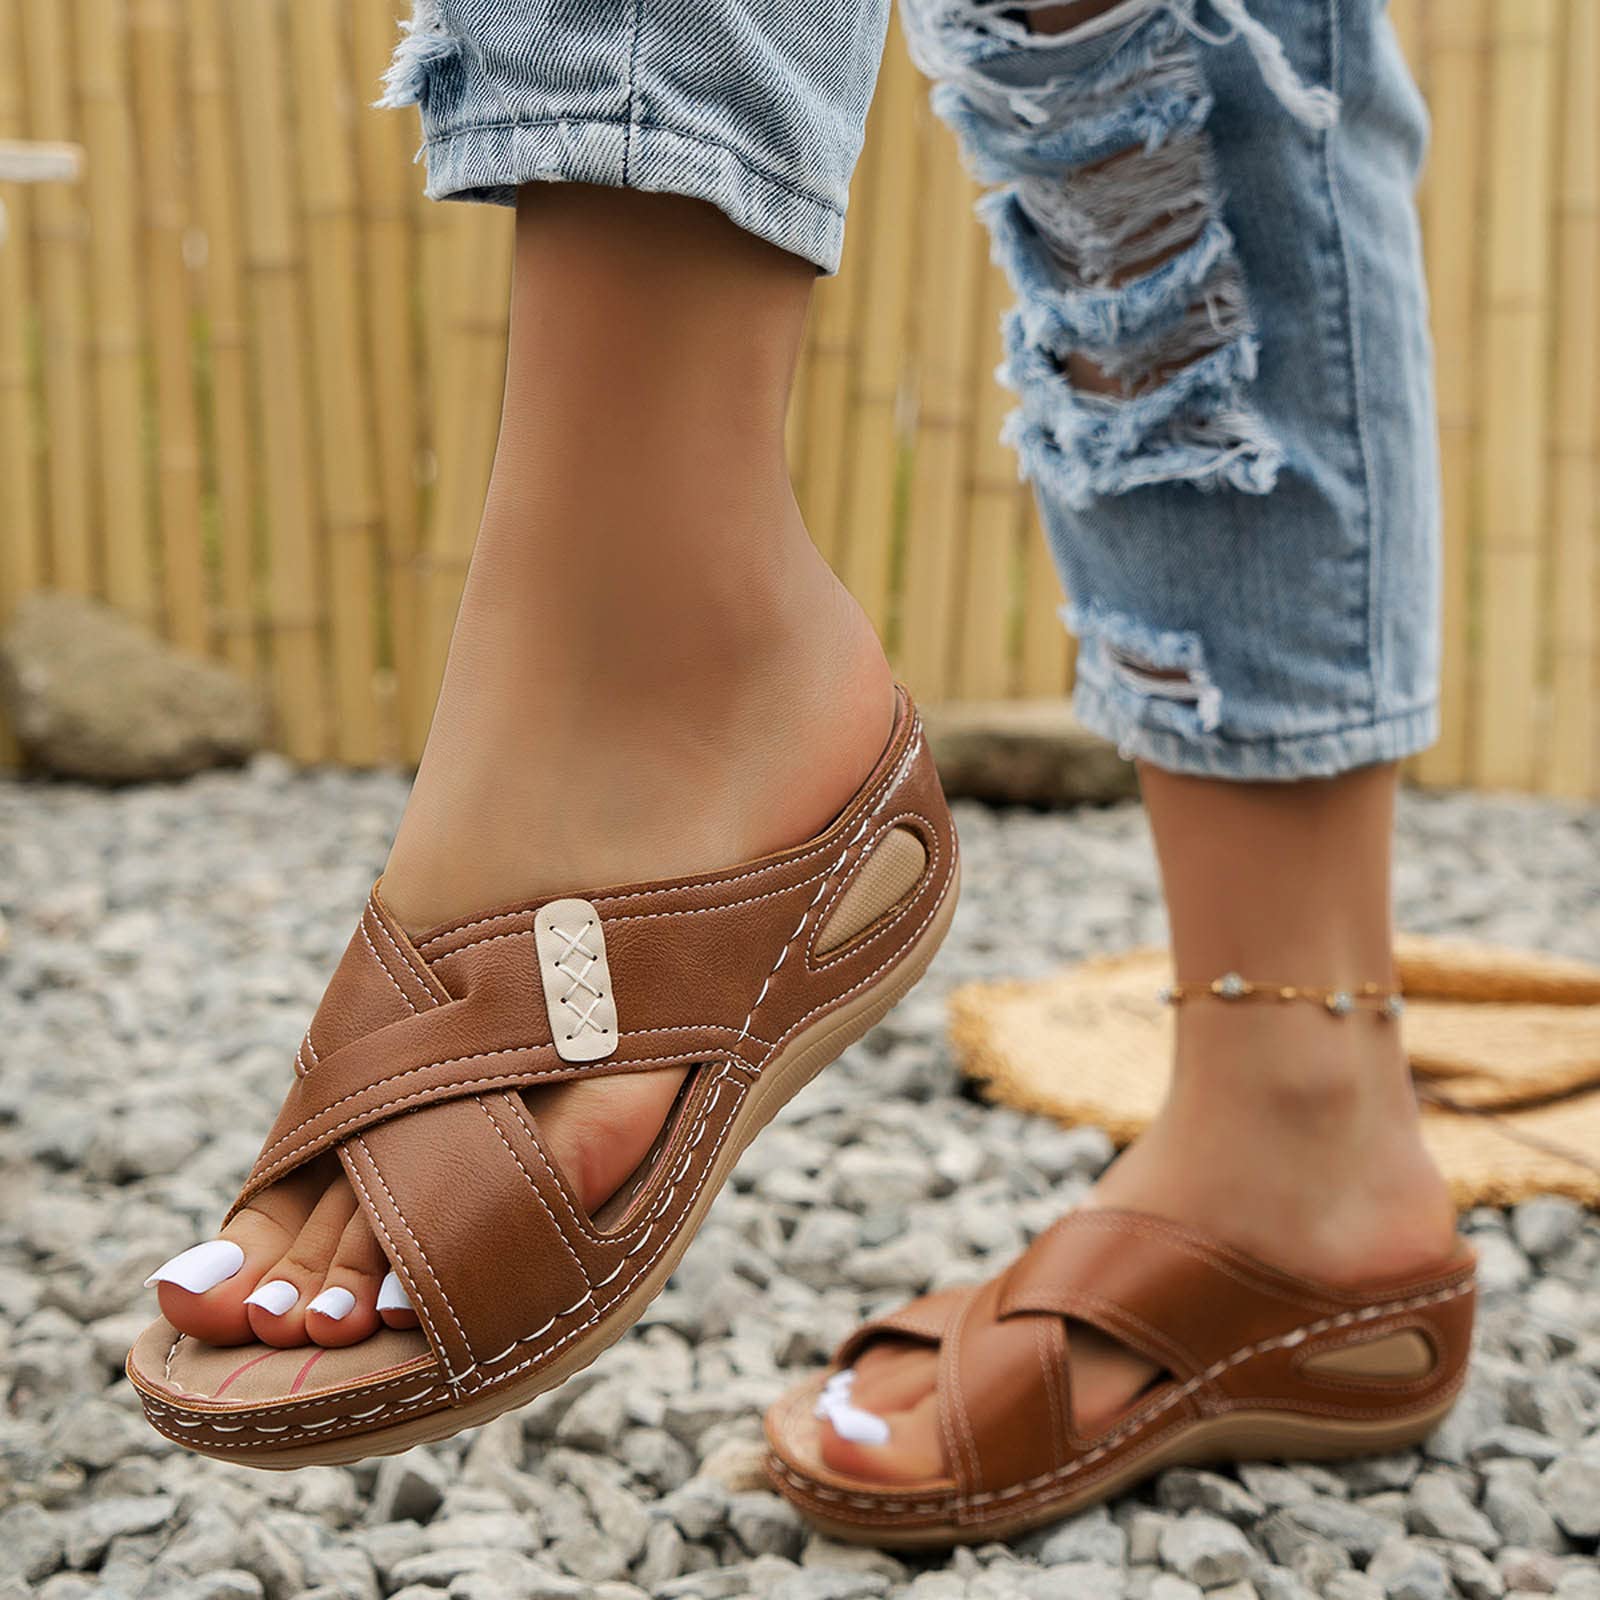 ZHIZAIHU Women Slip On Wedge Sandals Summer Comfortable Beach Shoes PU Leather Open Toe Platform Sandals (Brown, 8)